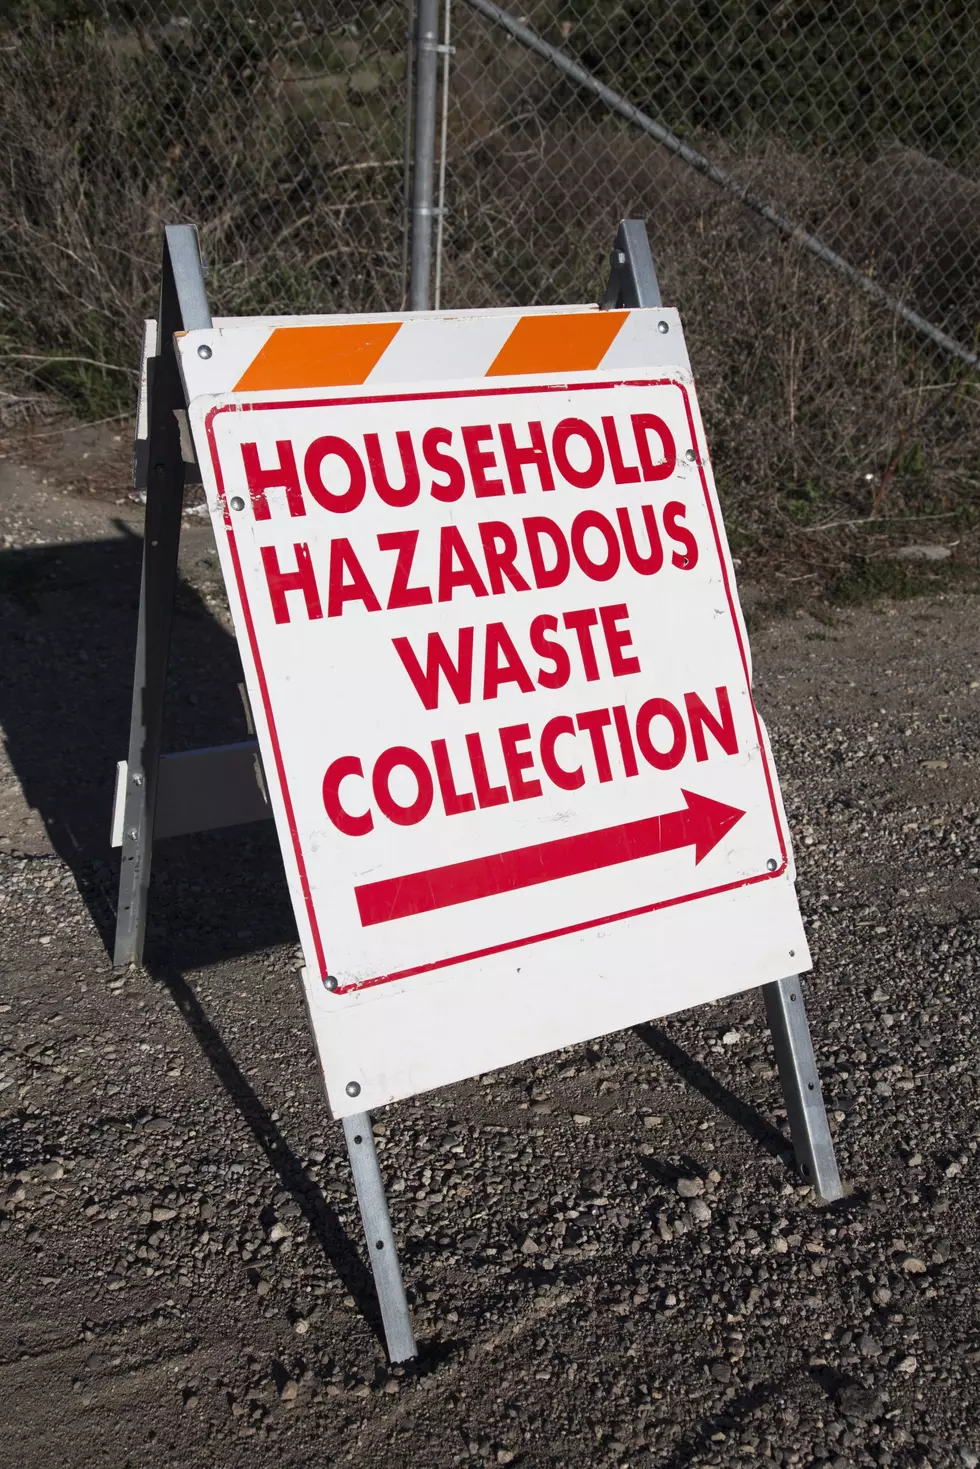 Douglas County Holding Hazardous Waste Collection Event